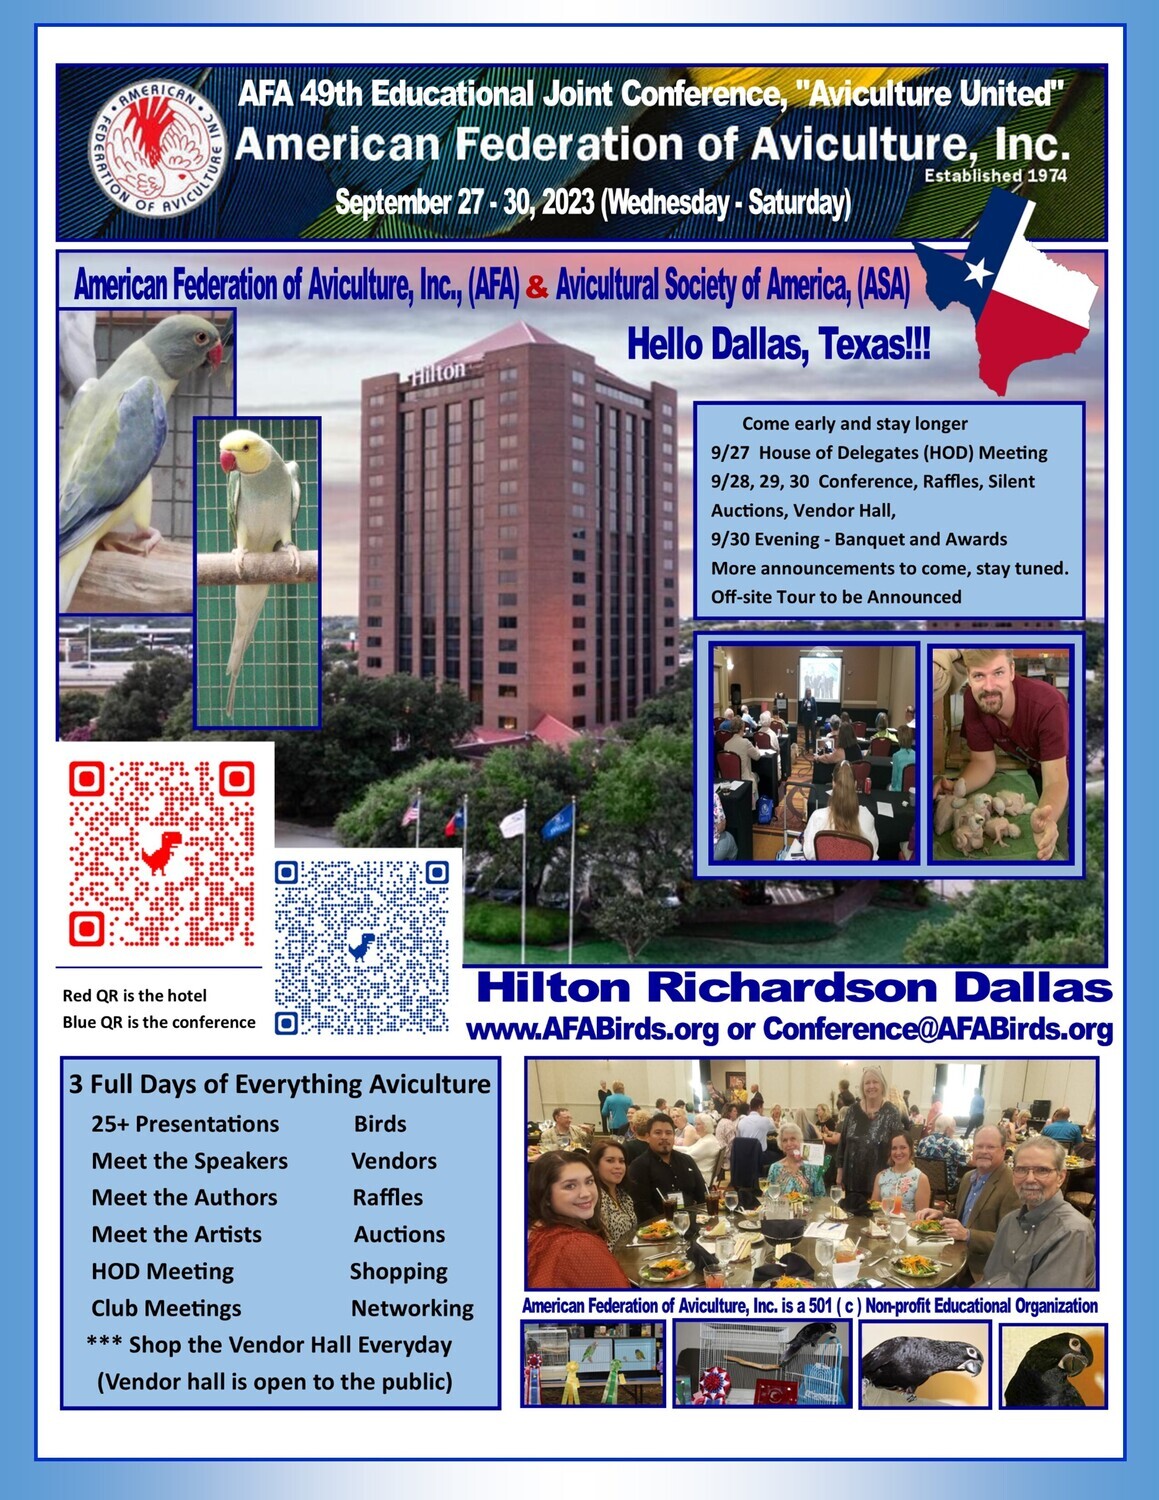 Sponsorship Registration for the AFA/ASA 2023 Educational Conference, Richardson, Texas